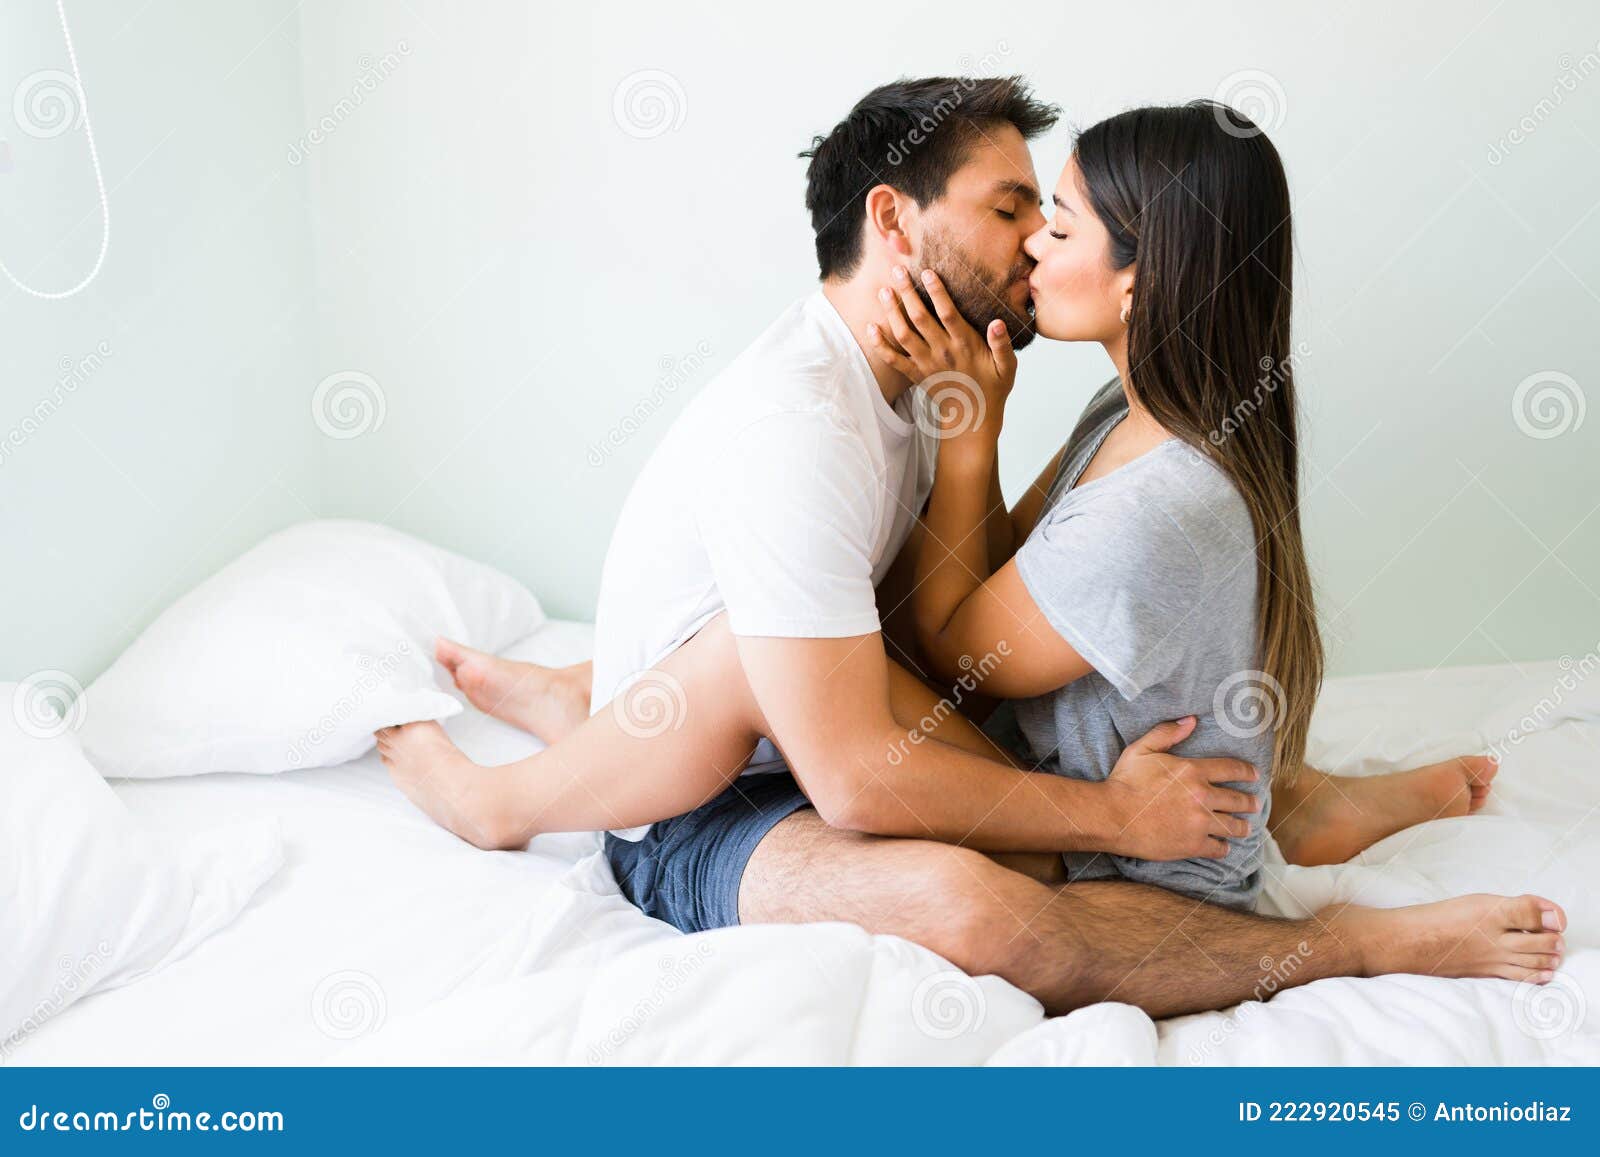 ashley dawn weaver share cute couple cuddling and kissing photos